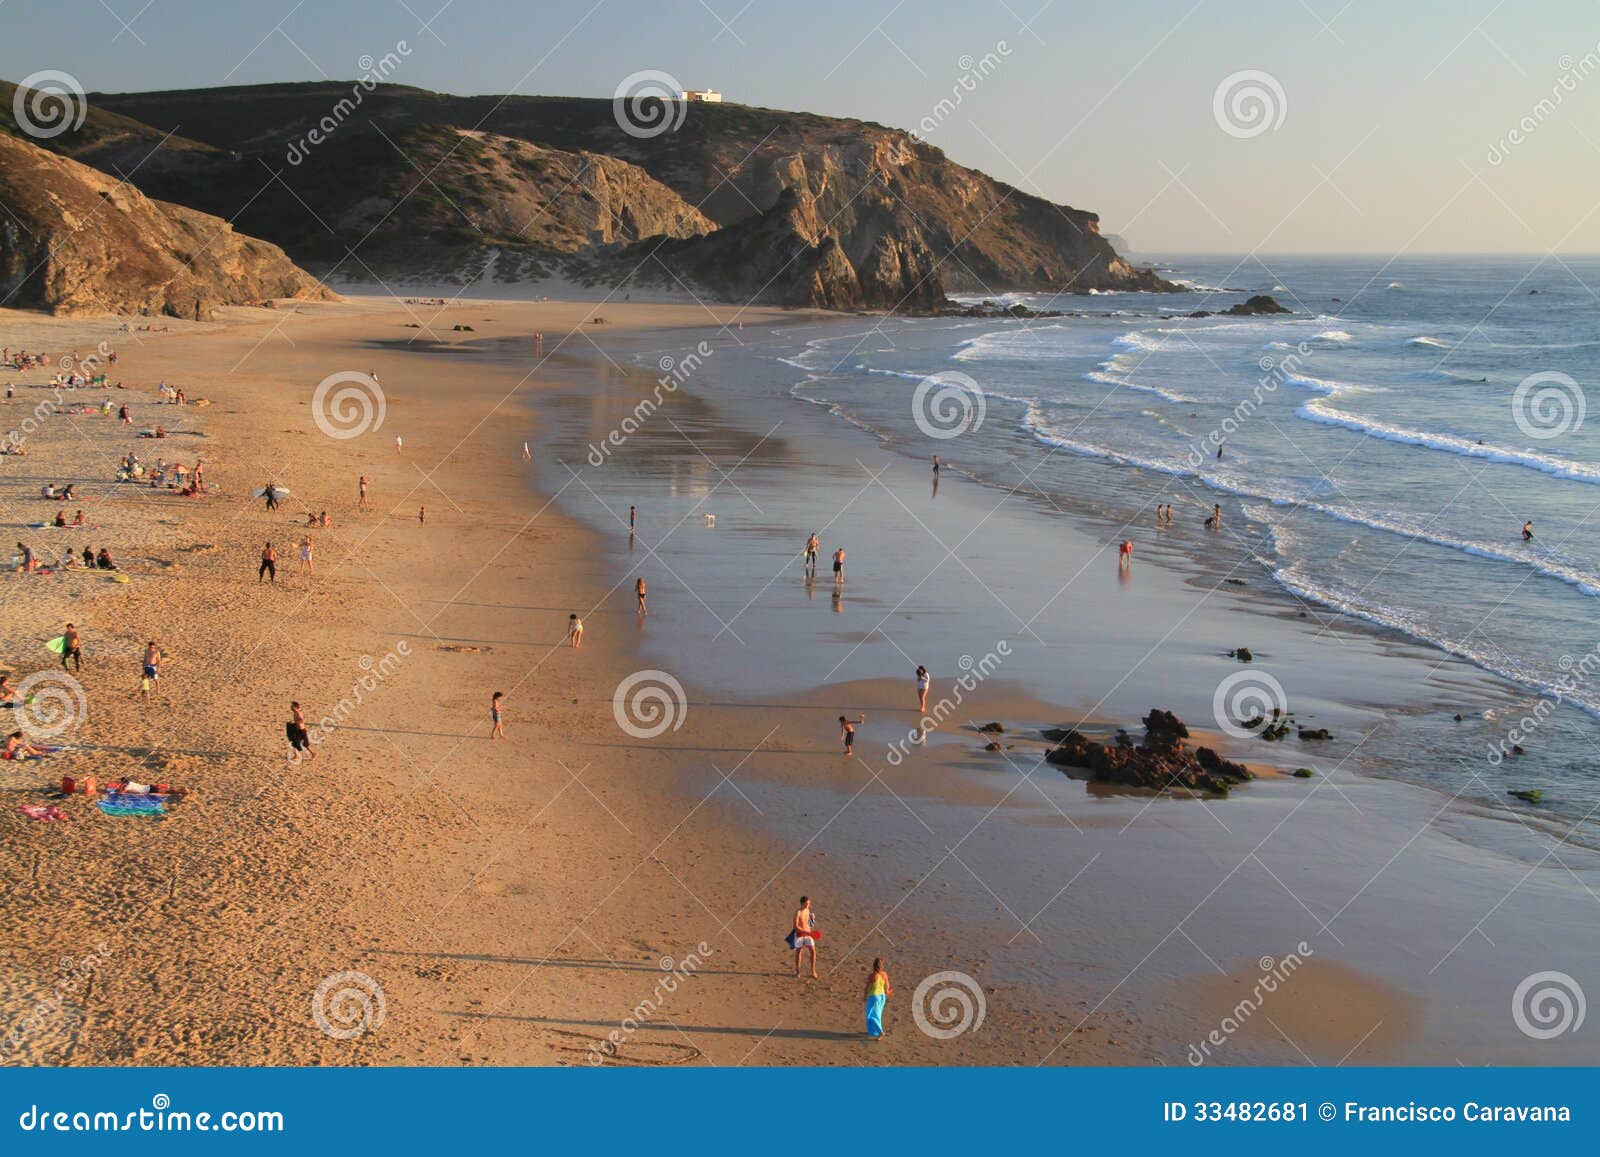 amado beach